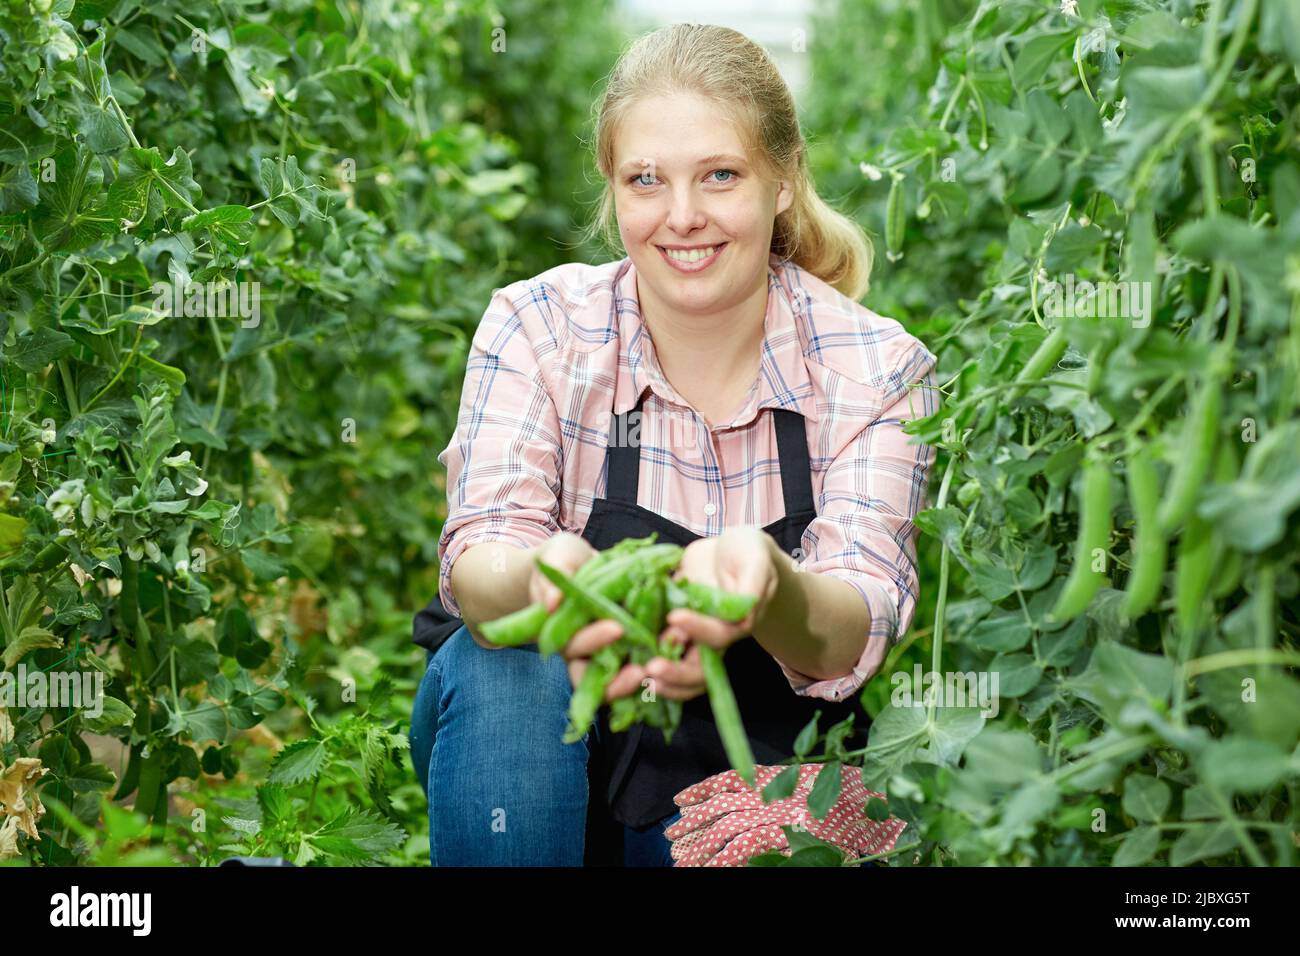 Woman farmer harvesting green peas in a greenhouse Stock Photo